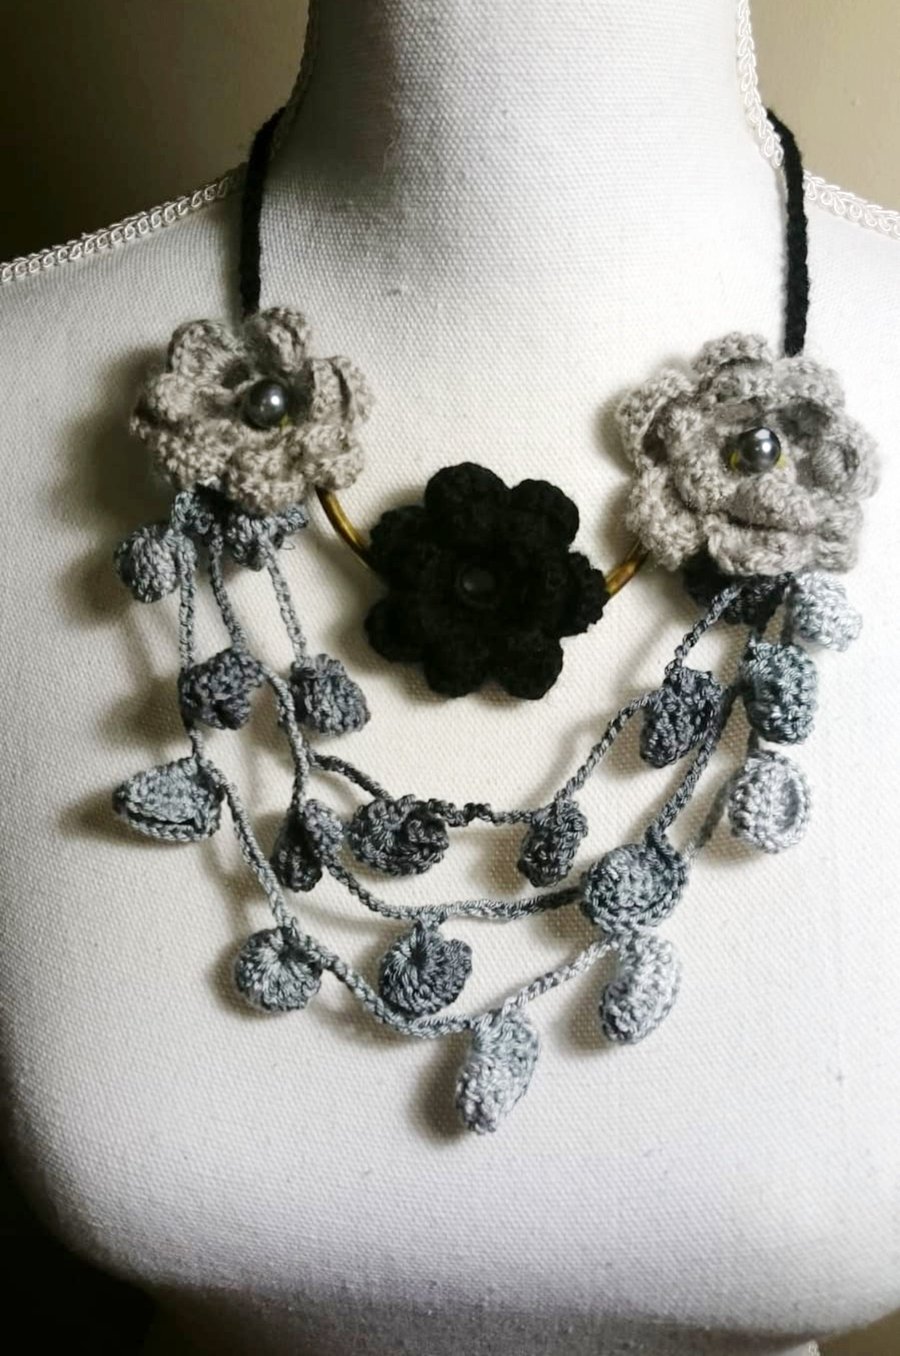 Boho Hand Crochet Necklace - Black White Woman accessoriess